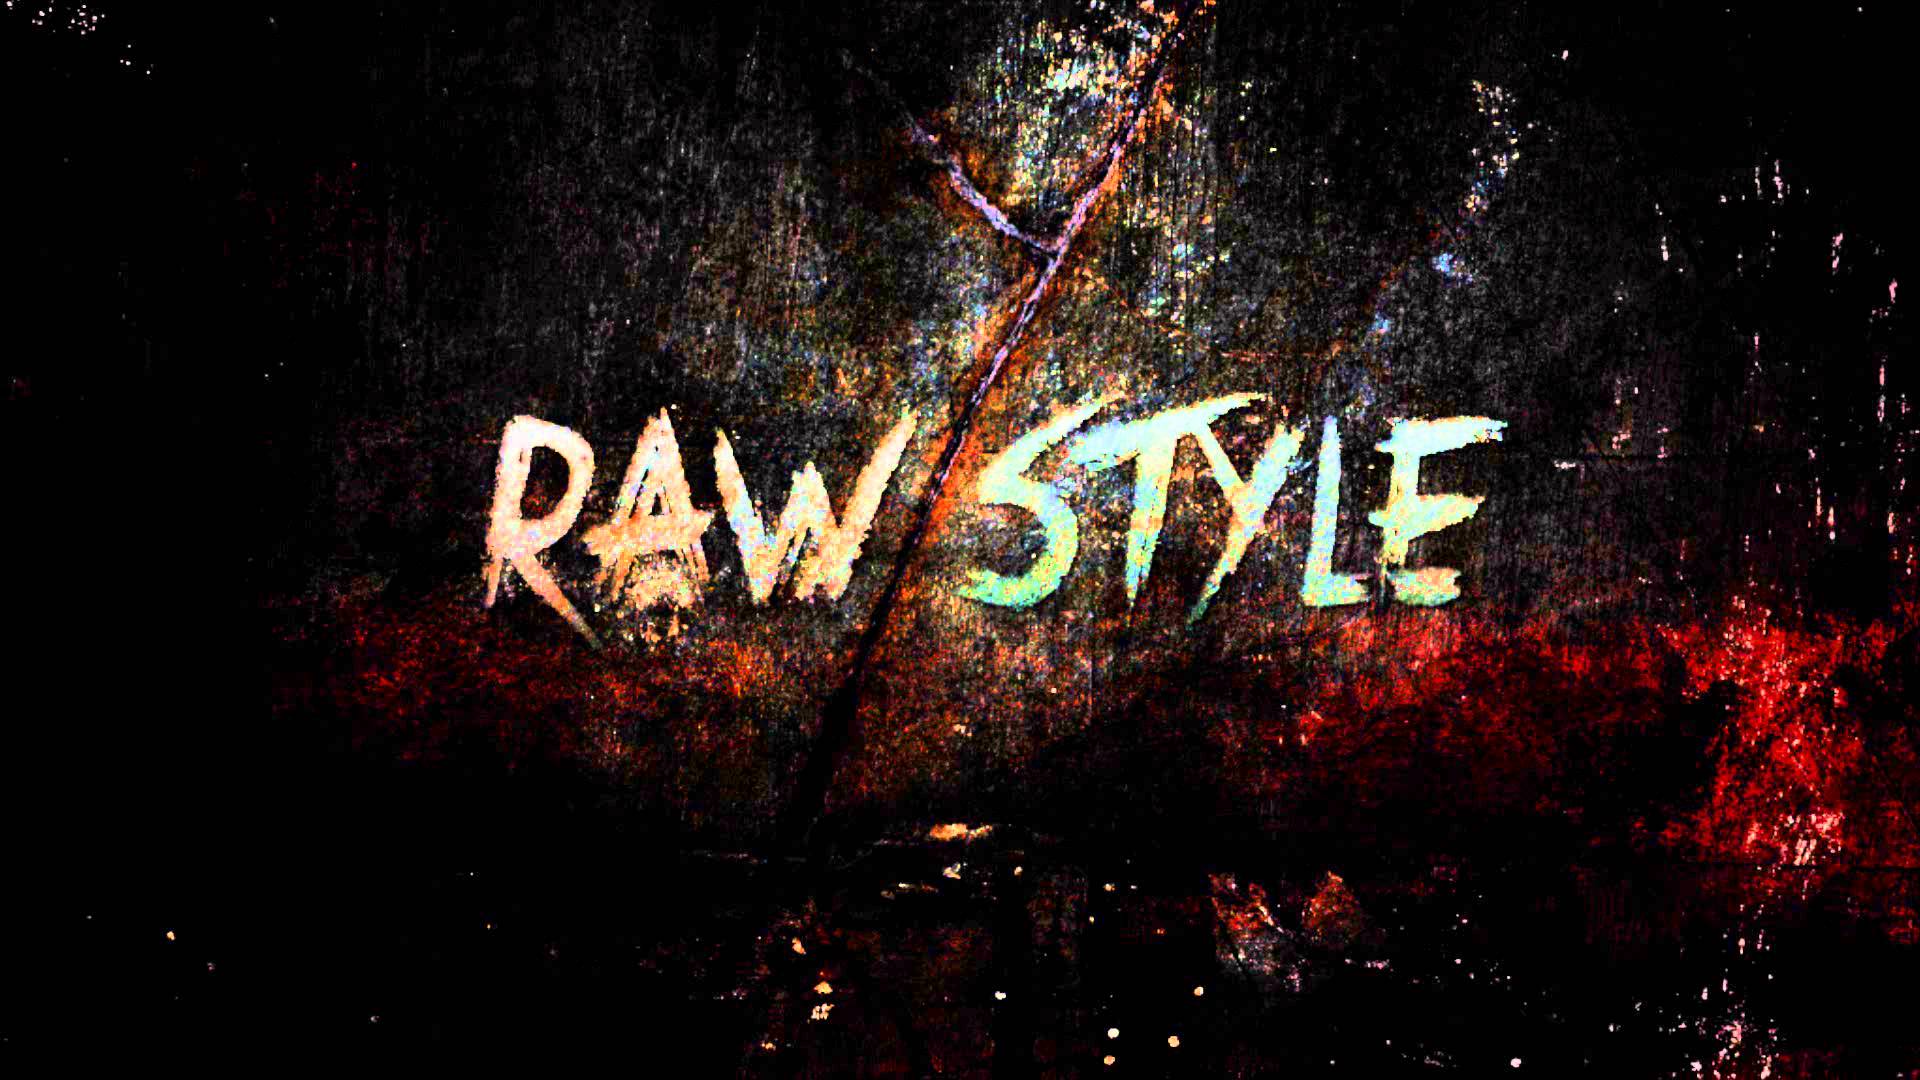 Mix Hardstyle Raw by DJ Darkside. Free Download on Hypeddit